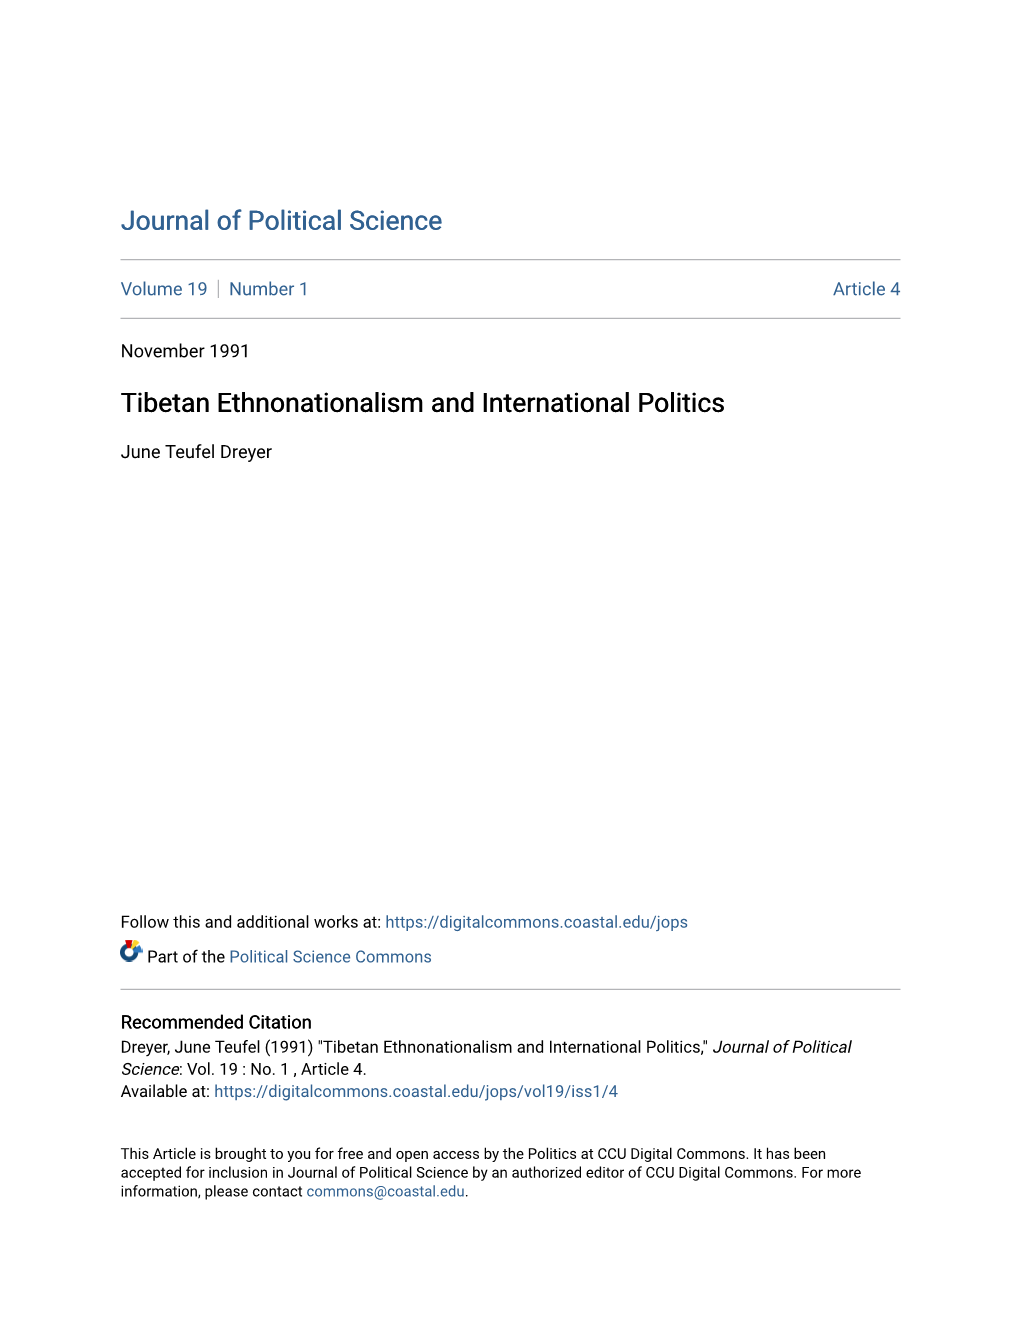 Tibetan Ethnonationalism and International Politics